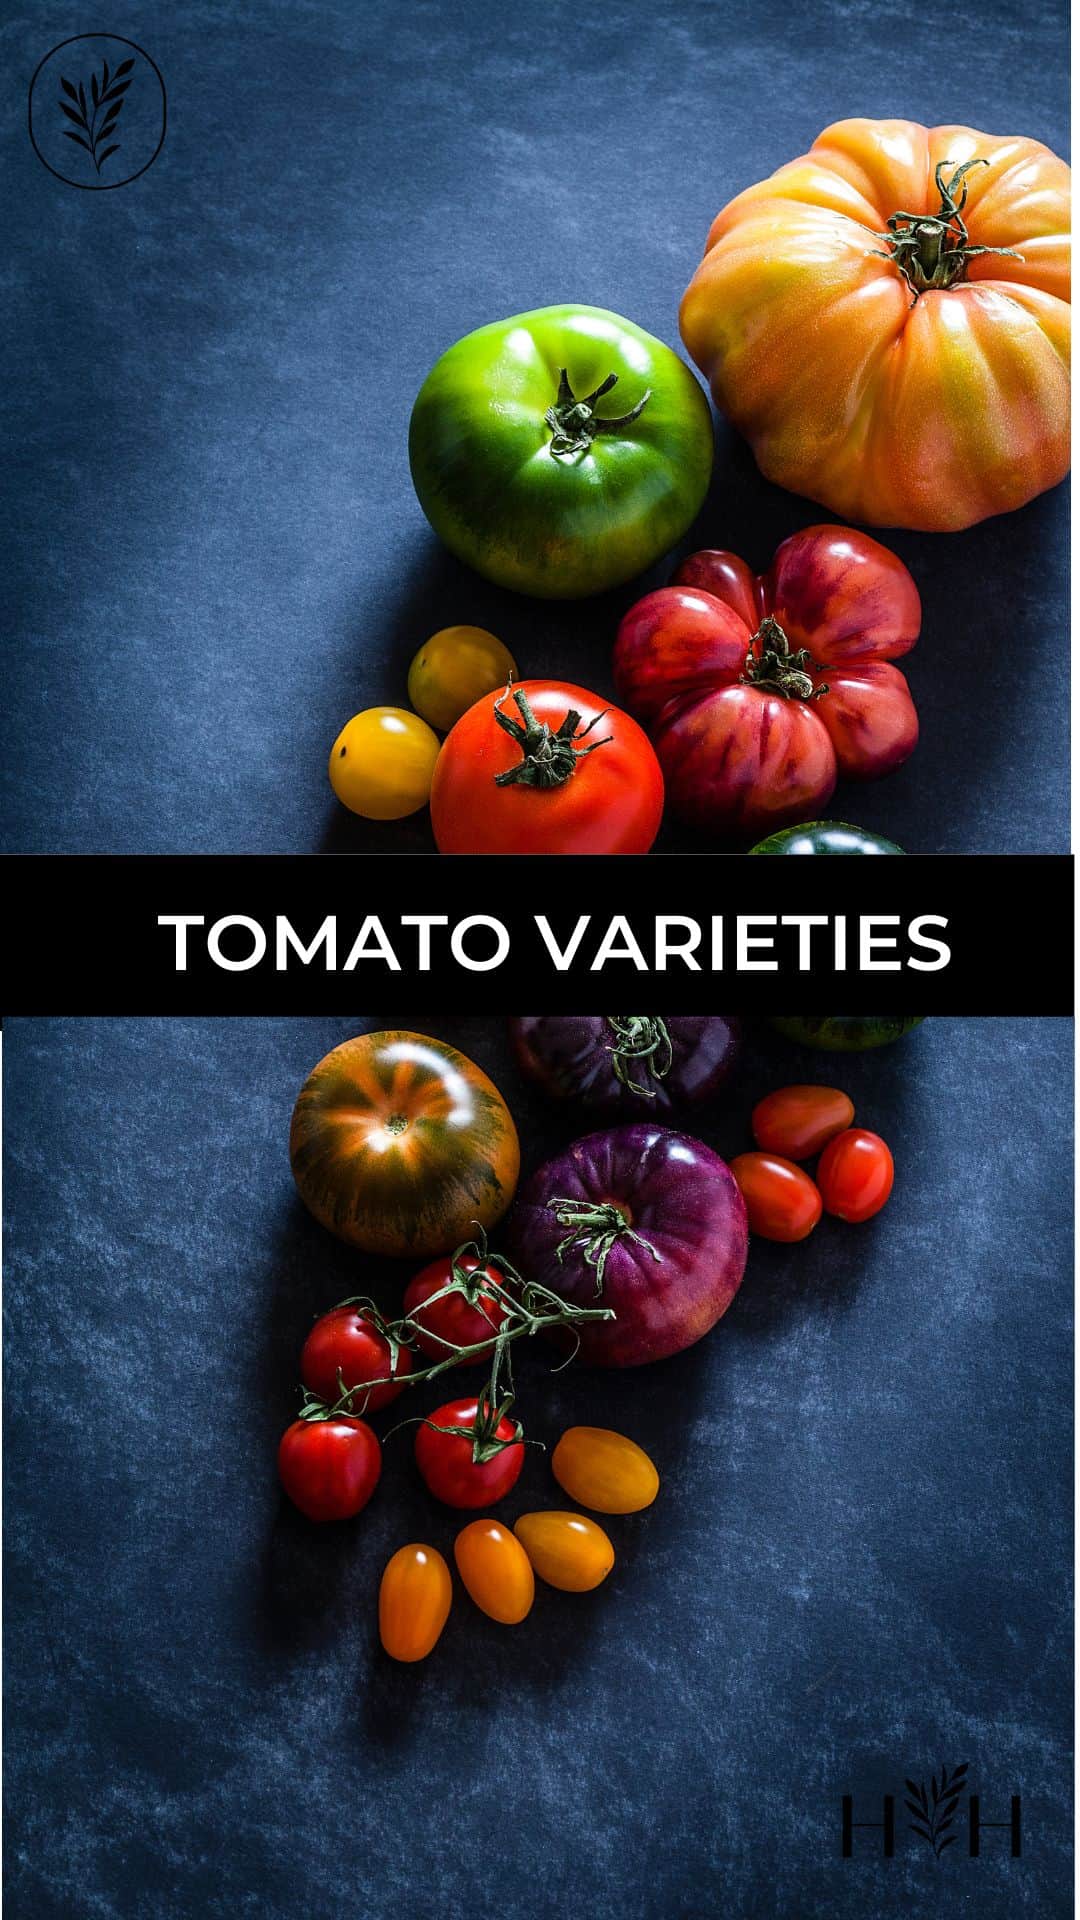 Tomato varieties via @home4theharvest